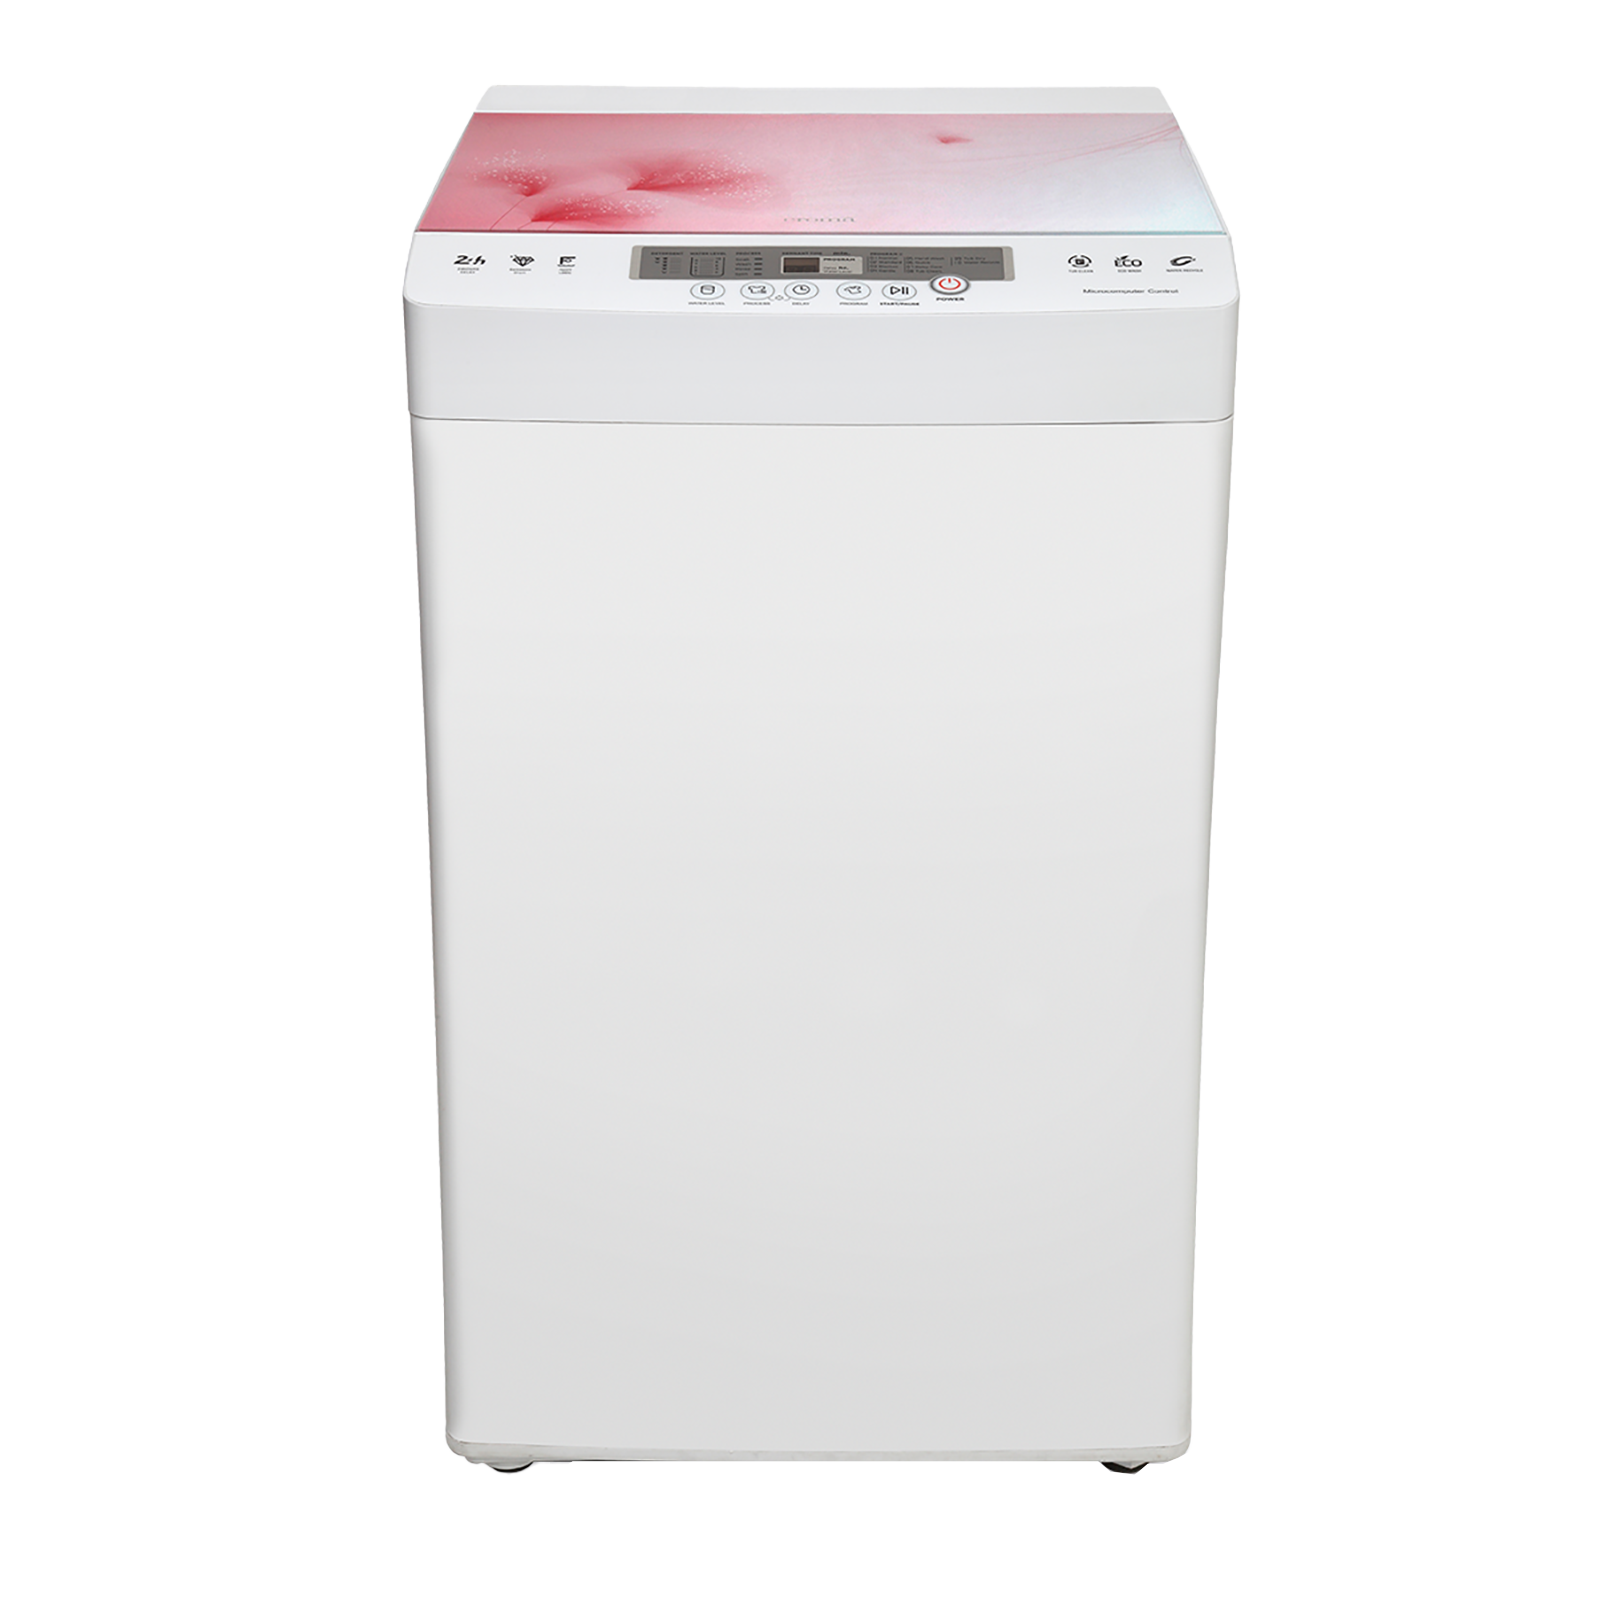 Croma 6 Kg Fully Automatic Top Loading Washing Machine (CRAW1300, White)_1